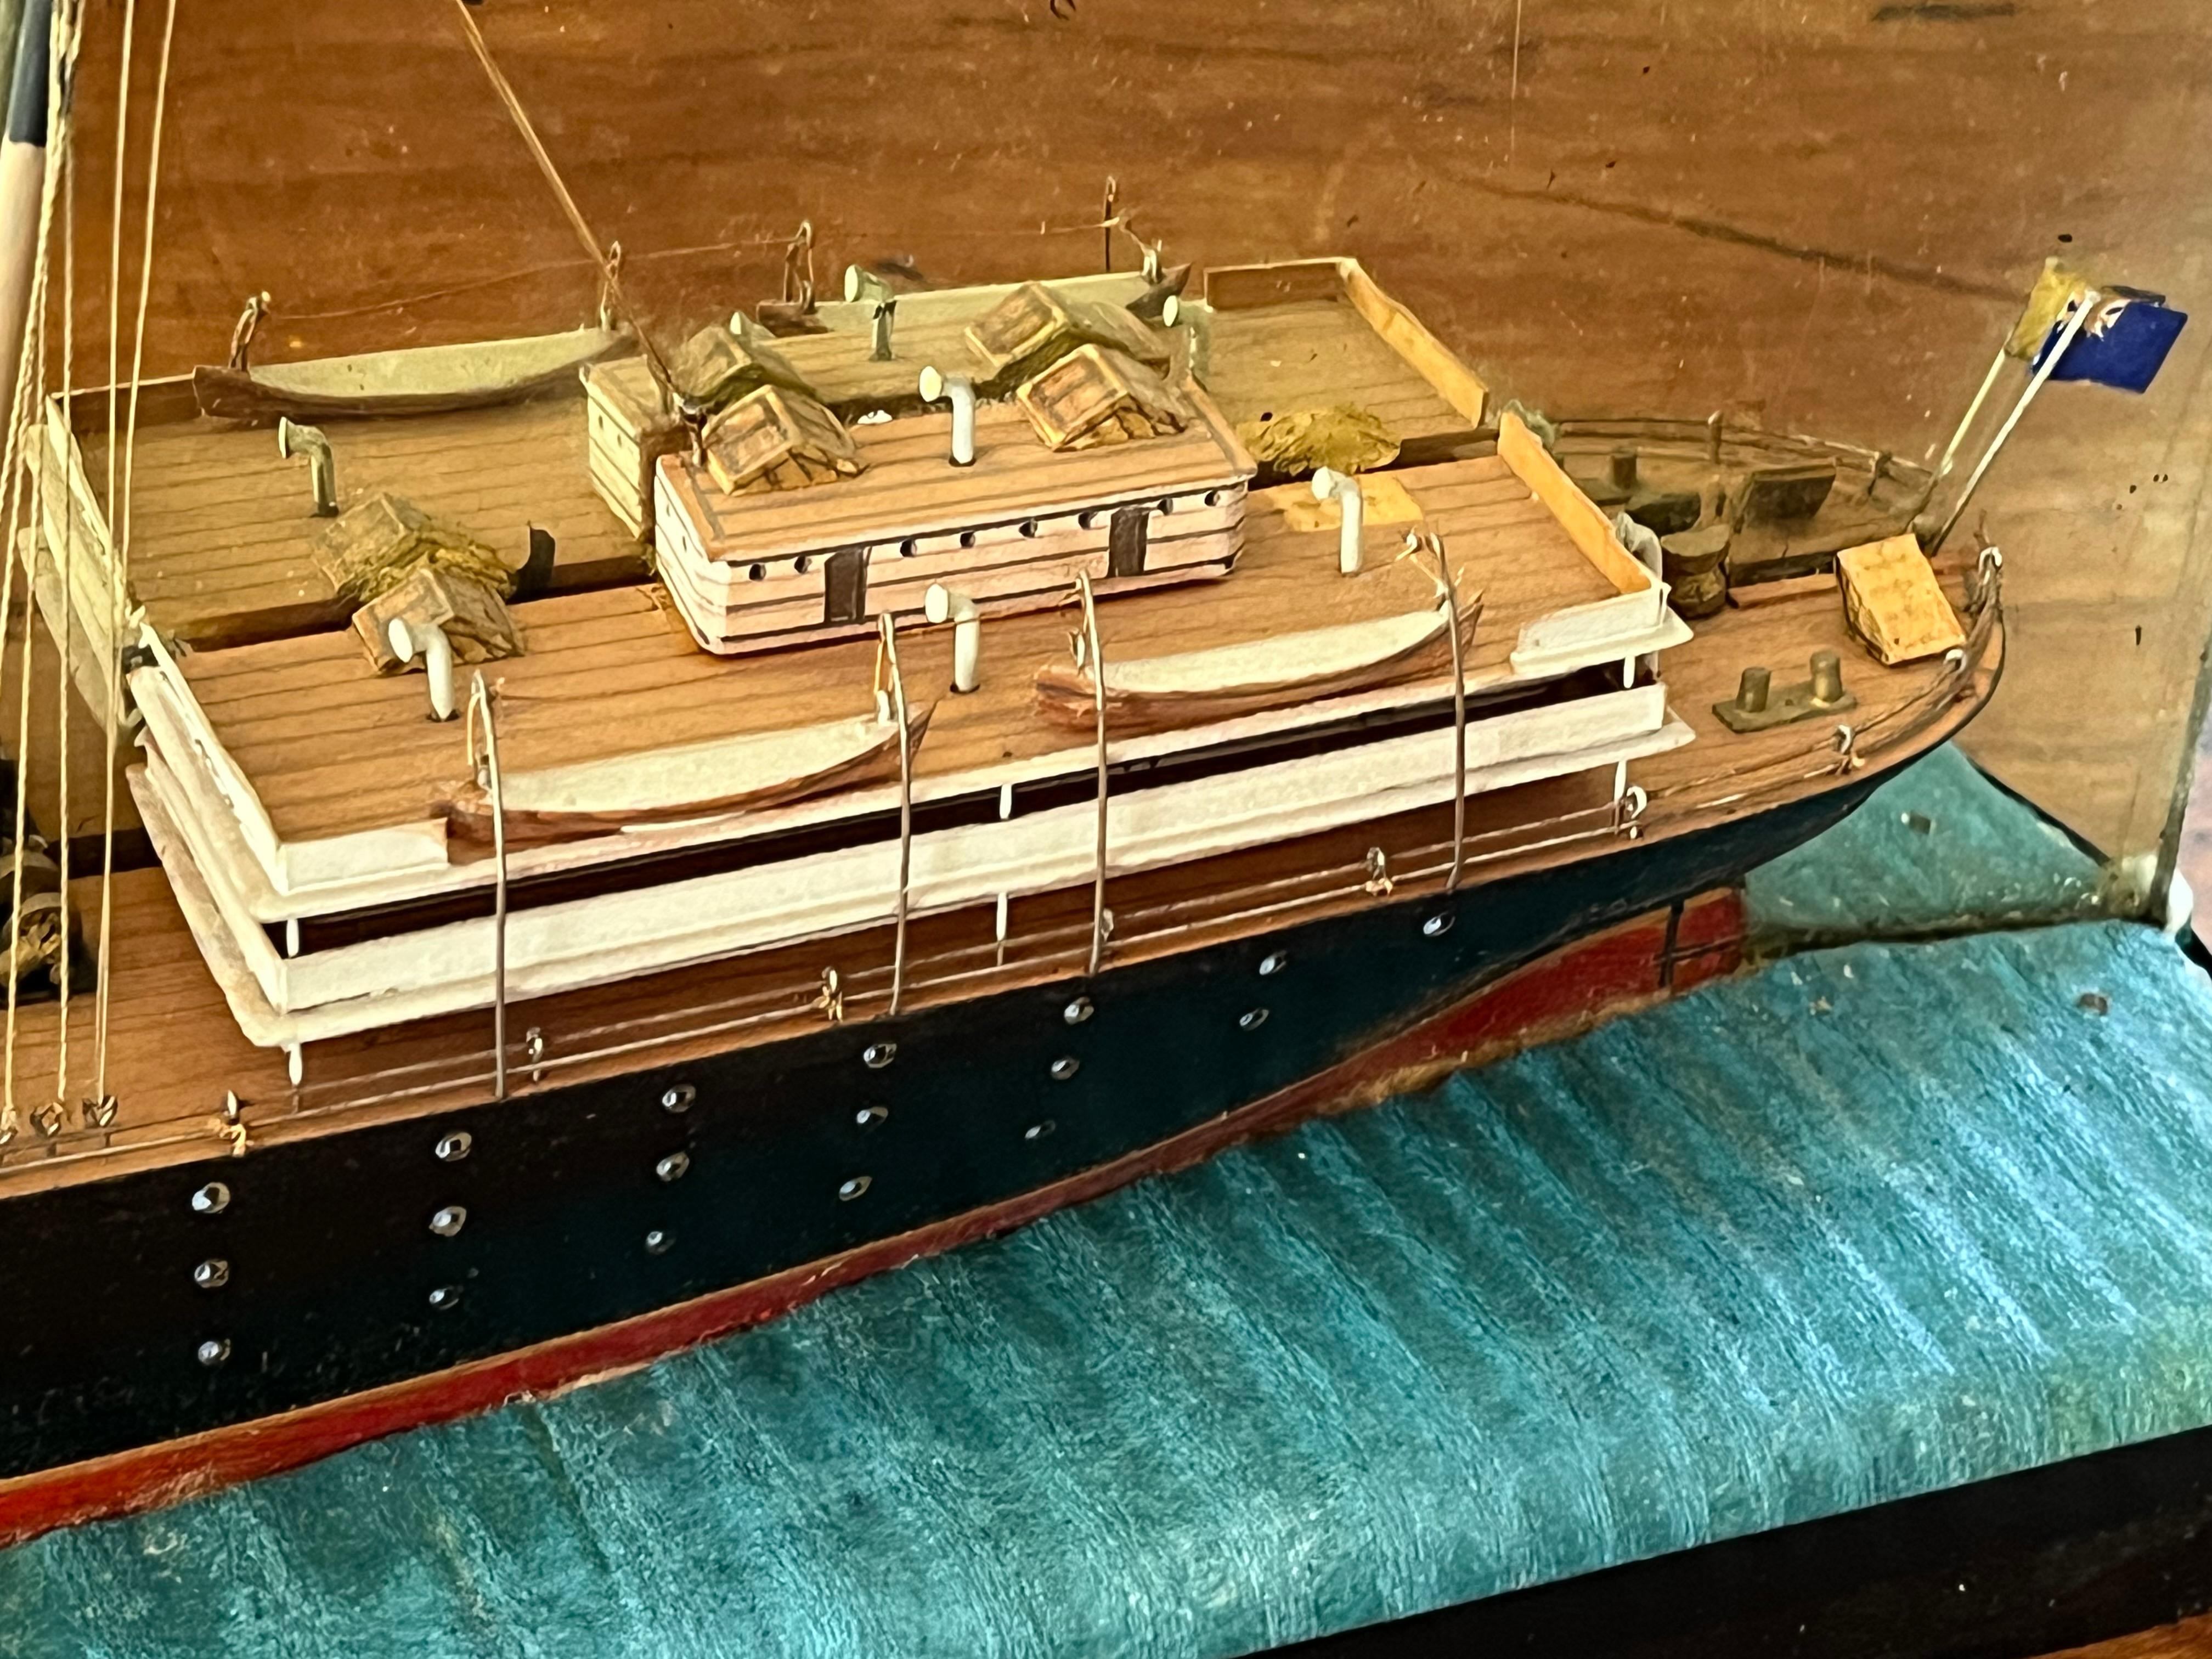 20th Century Half-model of Ocean Liner “Mauretania” For Sale